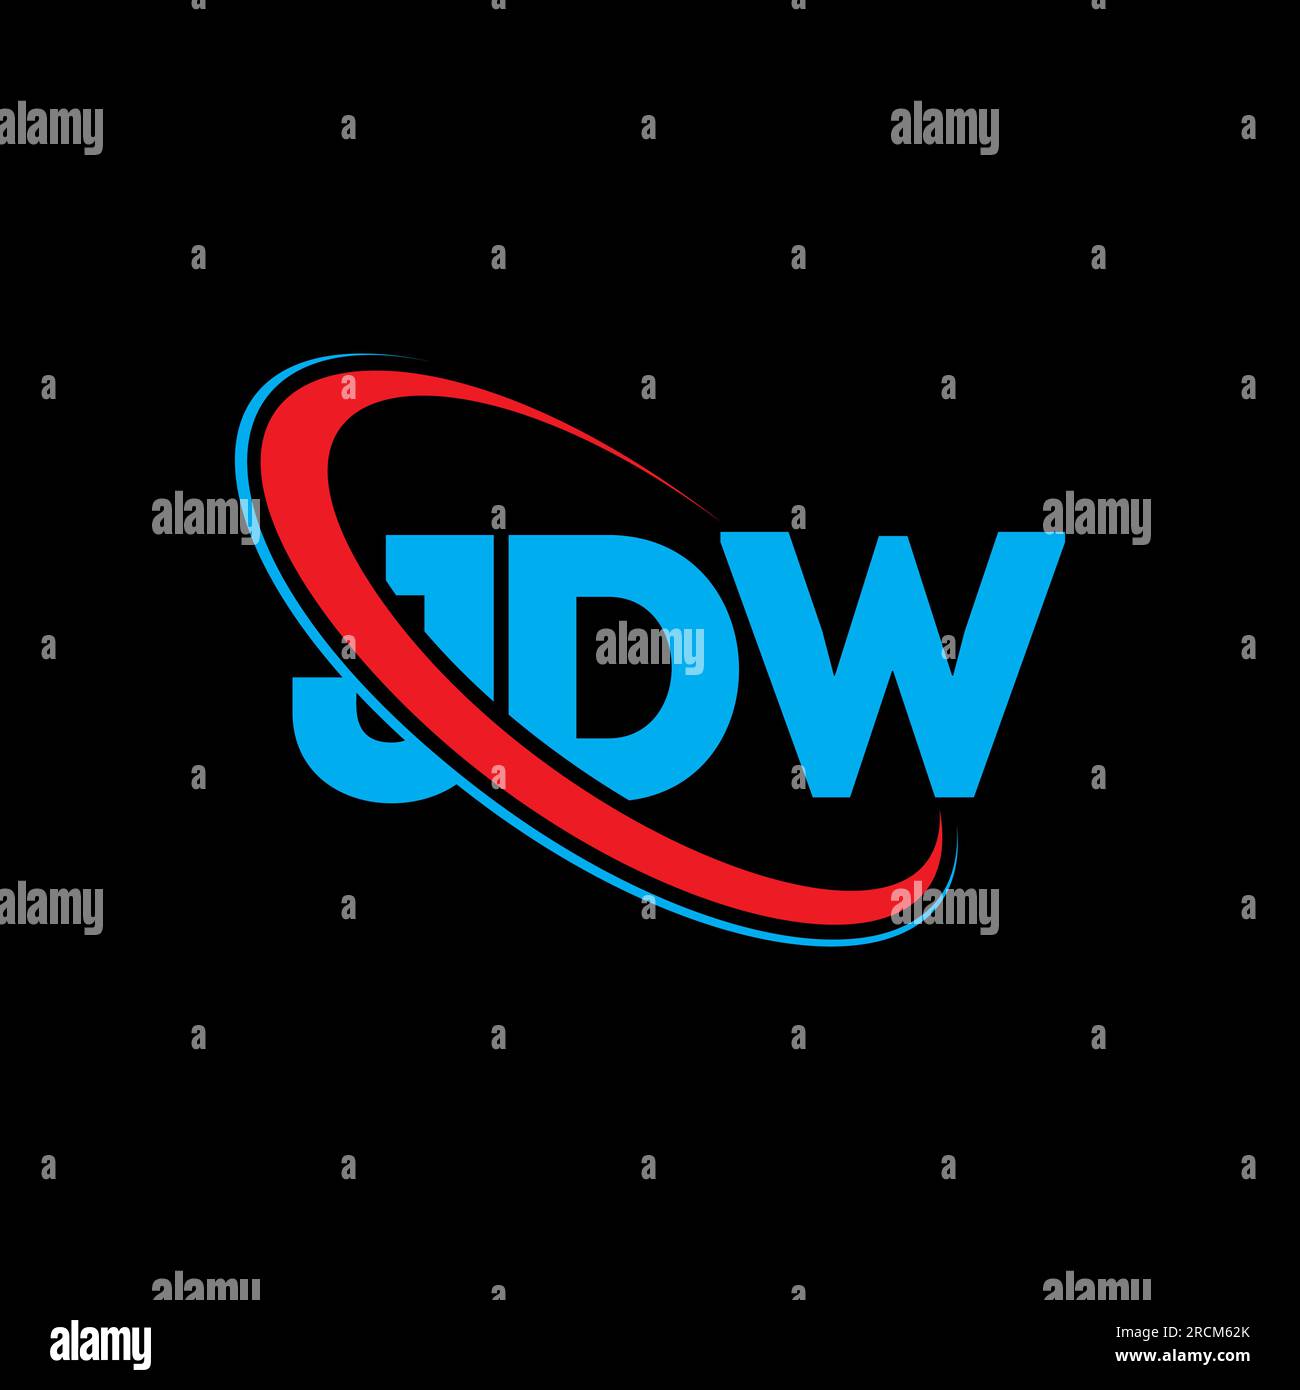 Jdw business logo Stock Vector Images - Alamy